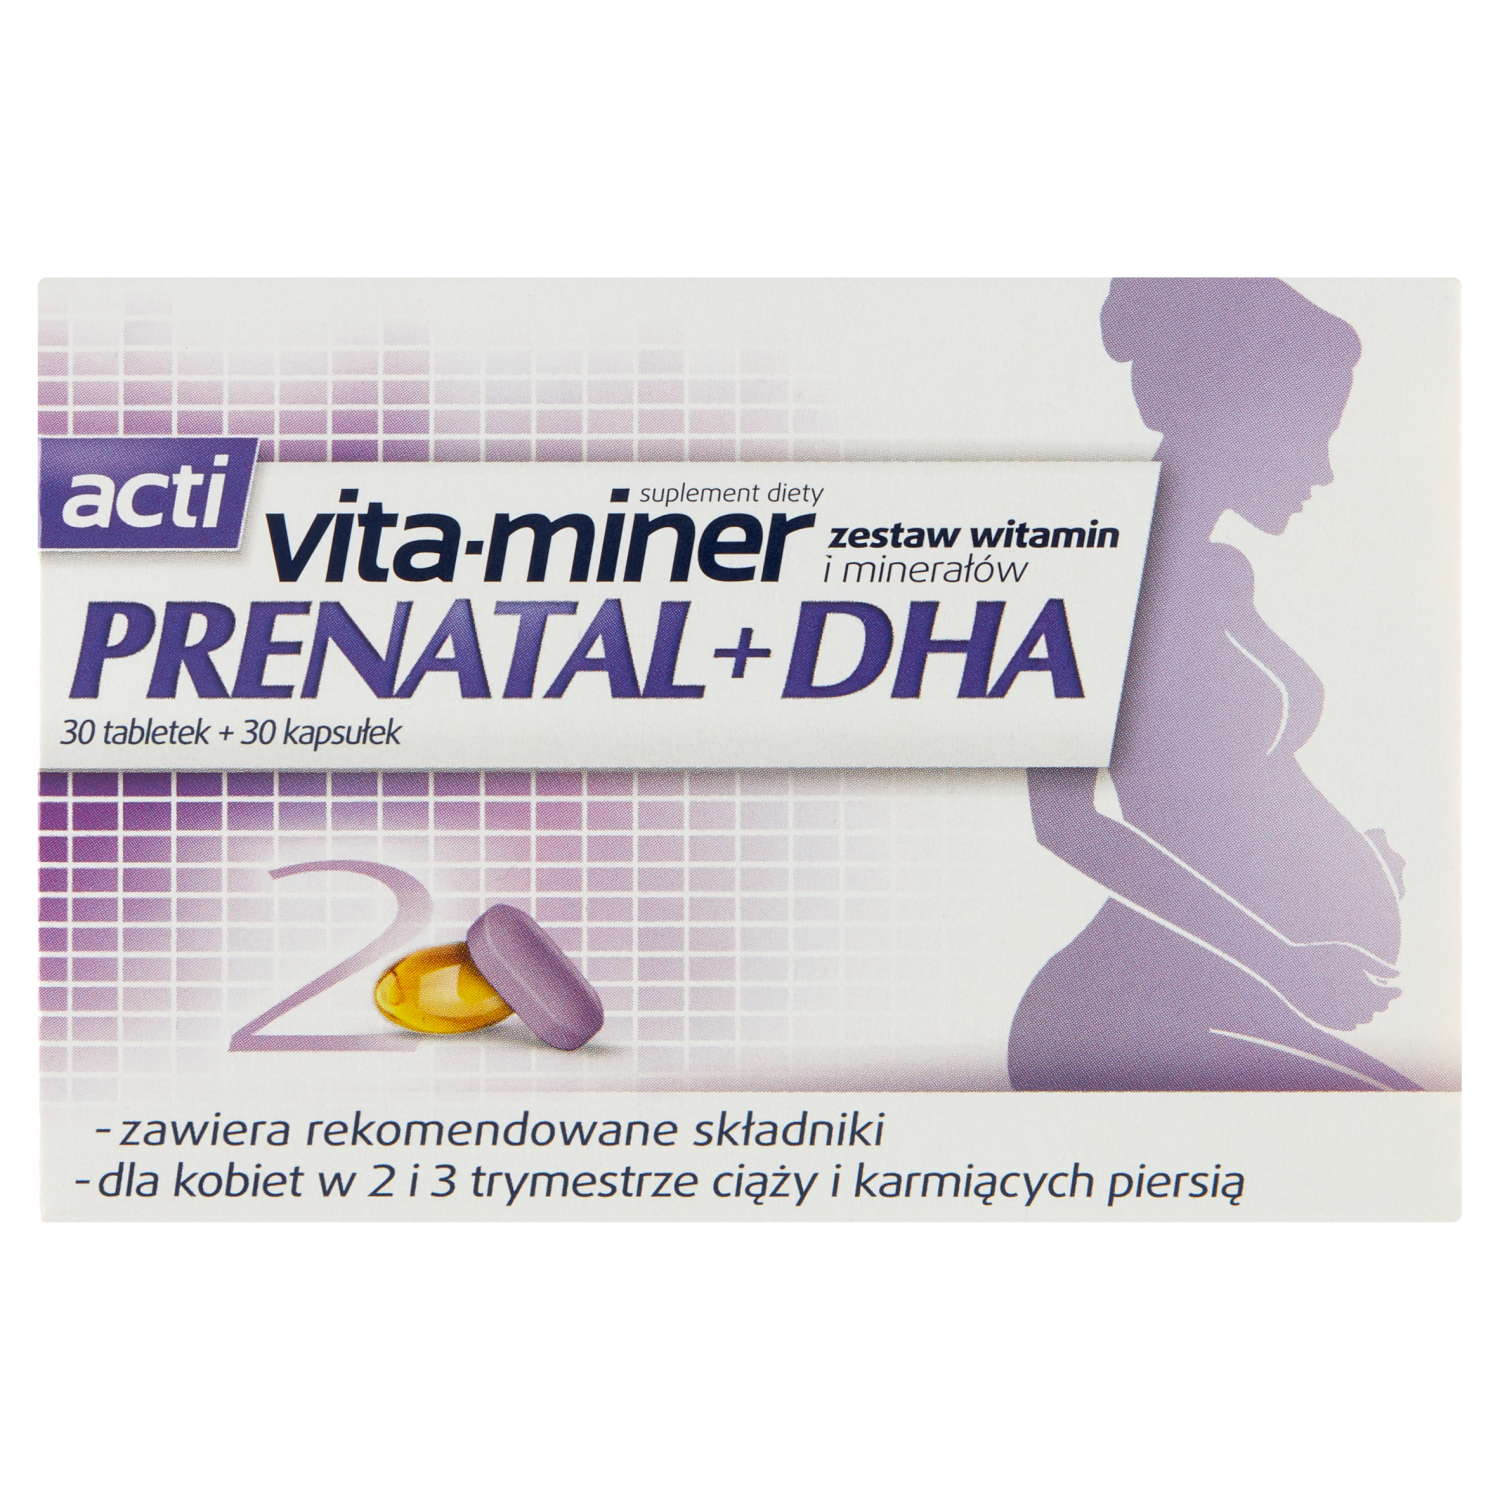 vita miner prenatal биологически активная добавка 60 таблеток 1 упаковка Acti Vita-Miner Prenatal DHA биологически активная добавка, 30+30 таблеток/1 упаковка